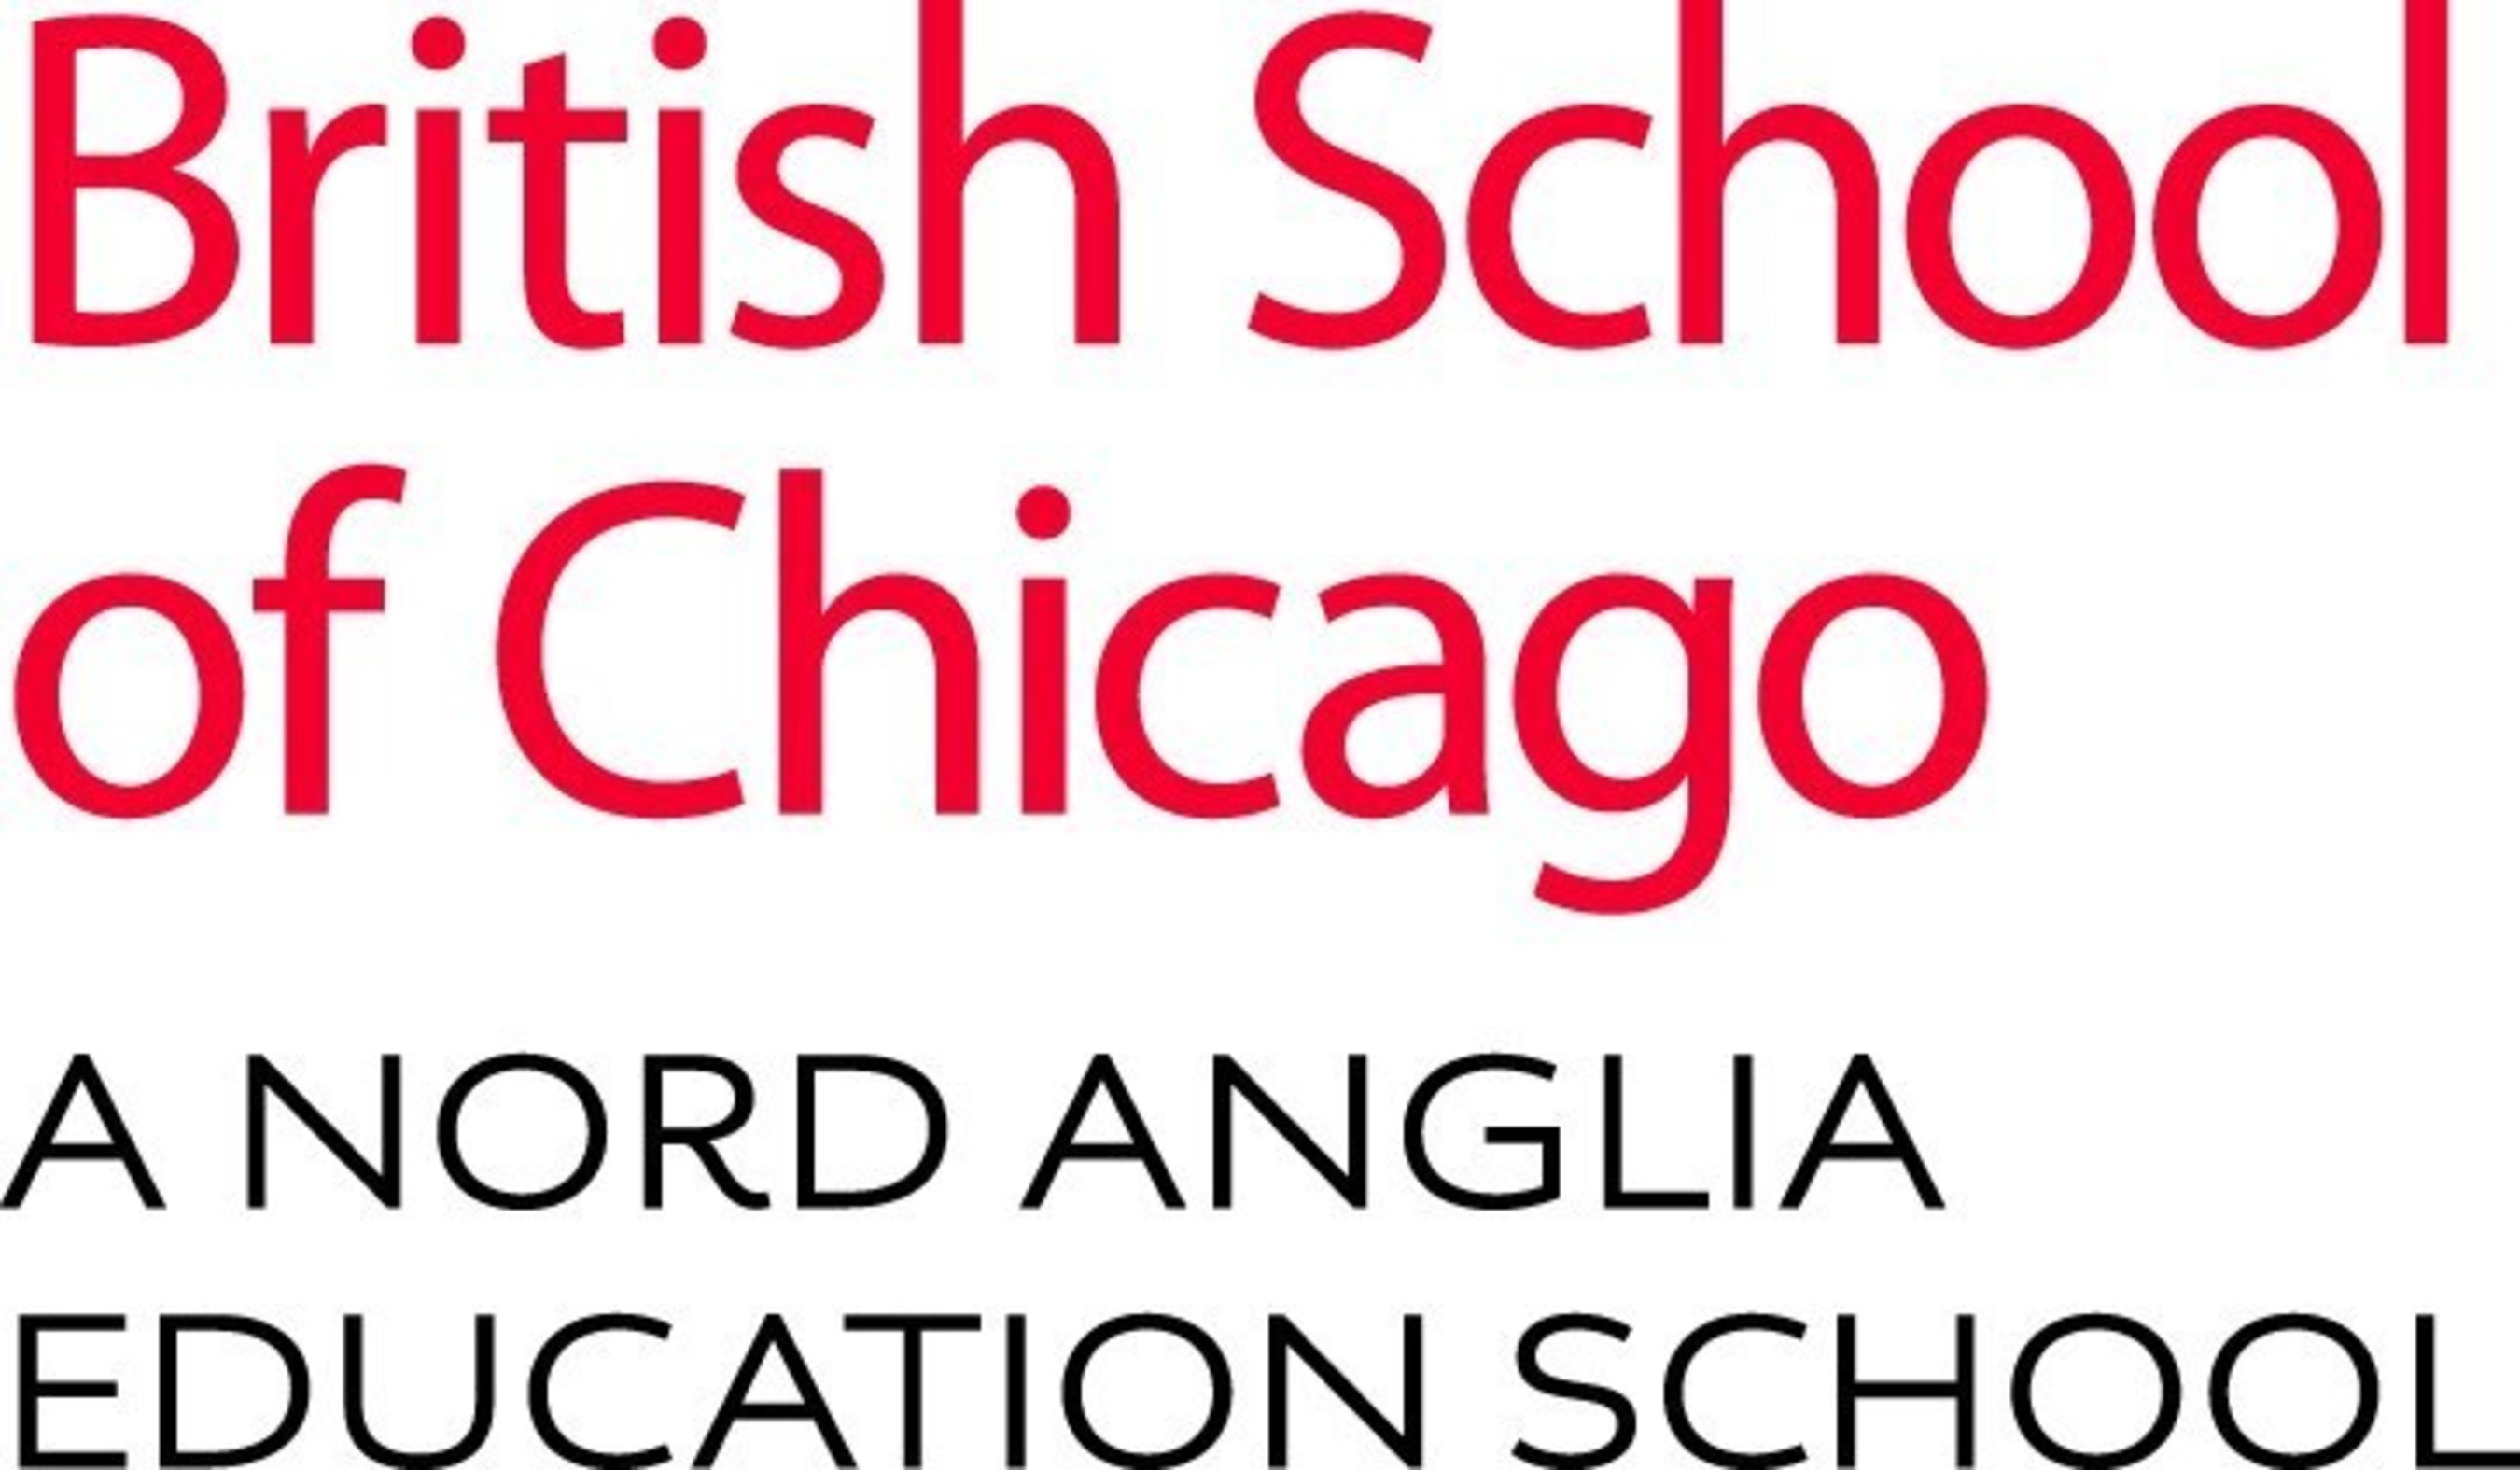 British School of Chicago